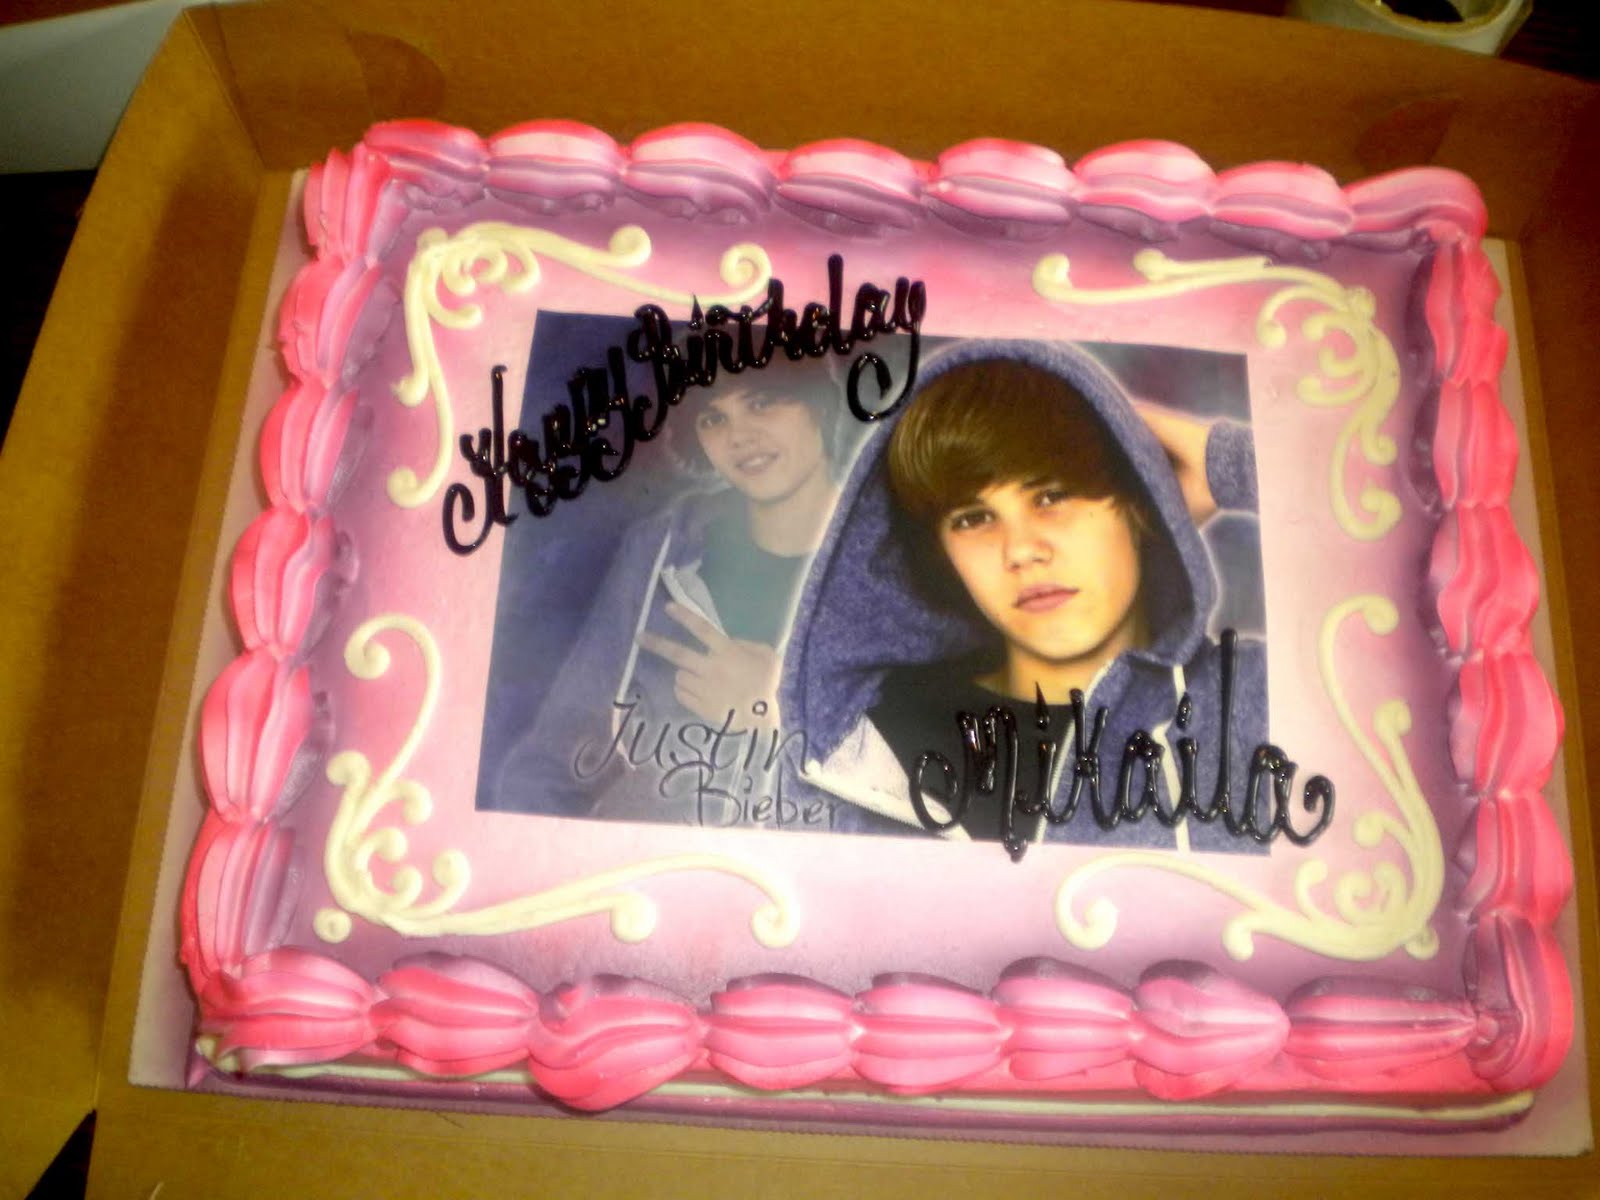 Hector's Custom Cakes: Justin Bieber Cakes